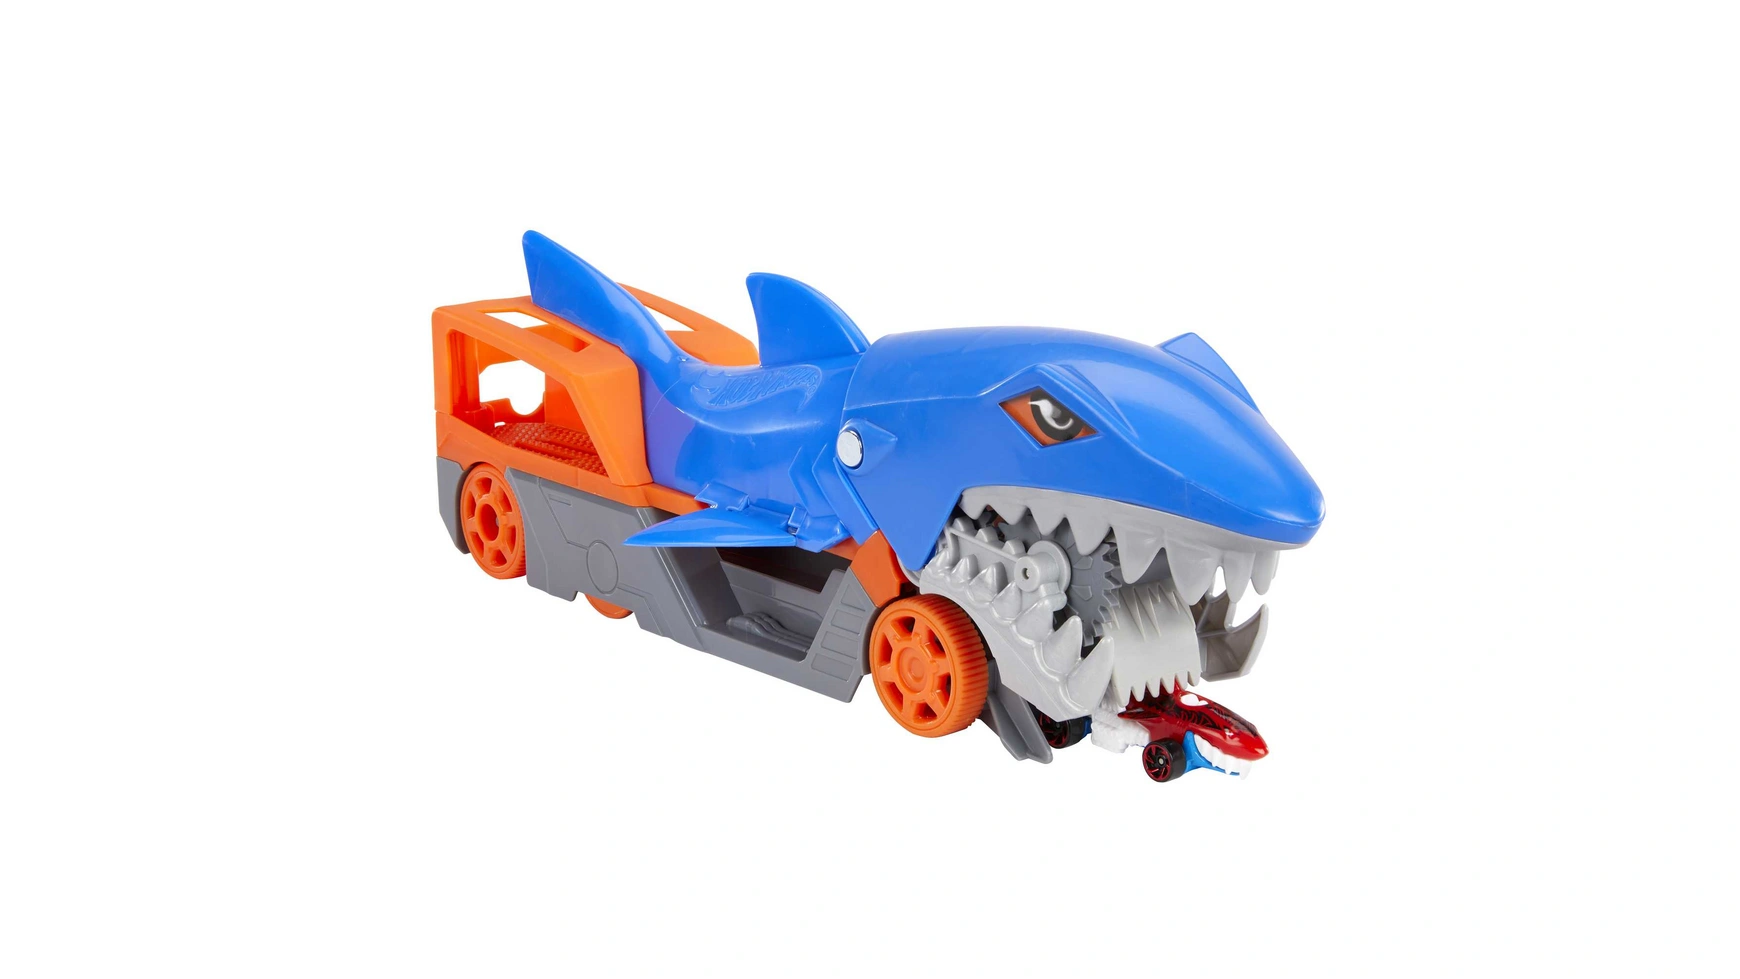 Транспортер Hot Wheels Hungry Shark, вмещающий до 5 игрушечных машинок